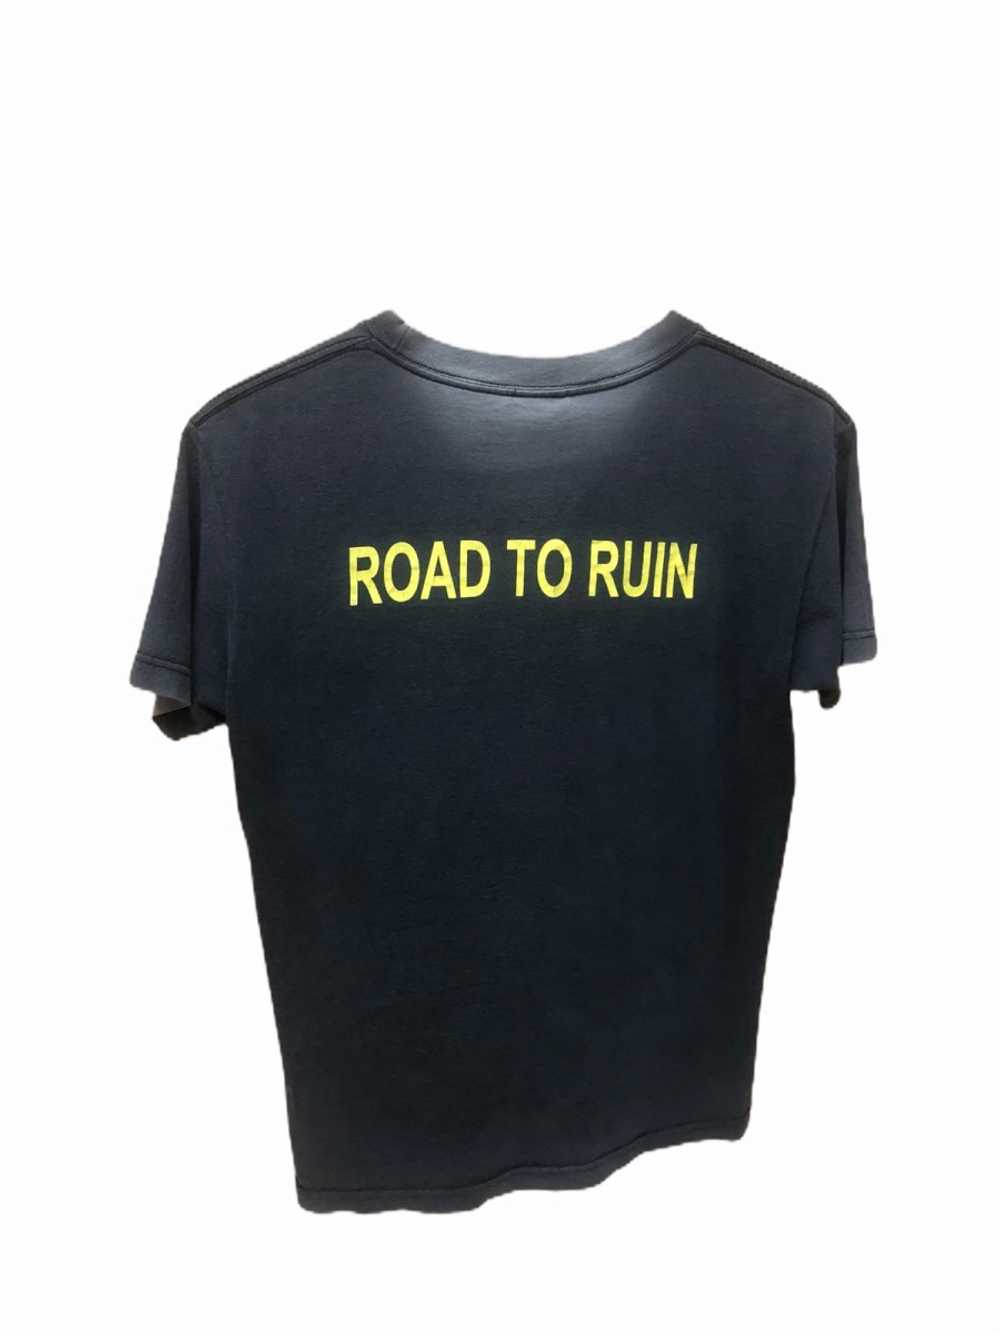 Vintage - Ramones Road To Ruin 1999 Shirt - image 2